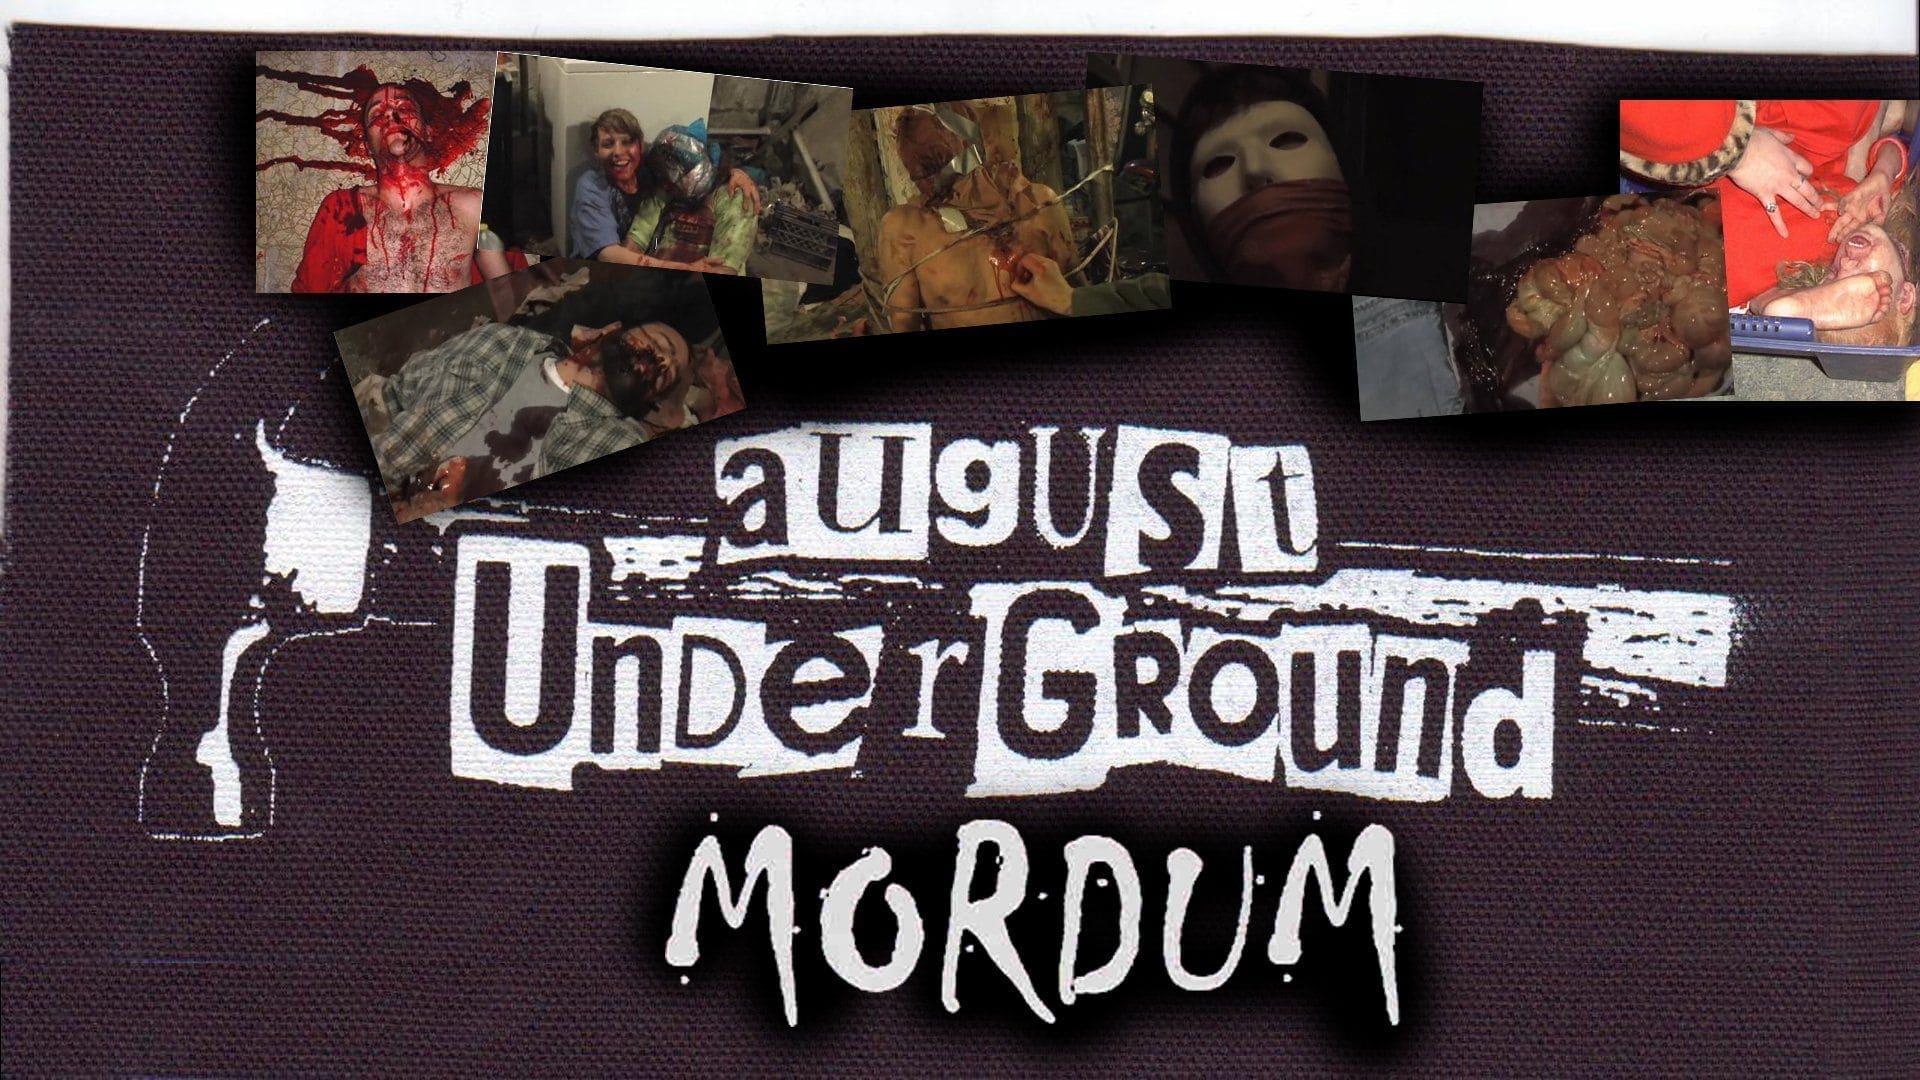 August Underground's Mordum backdrop